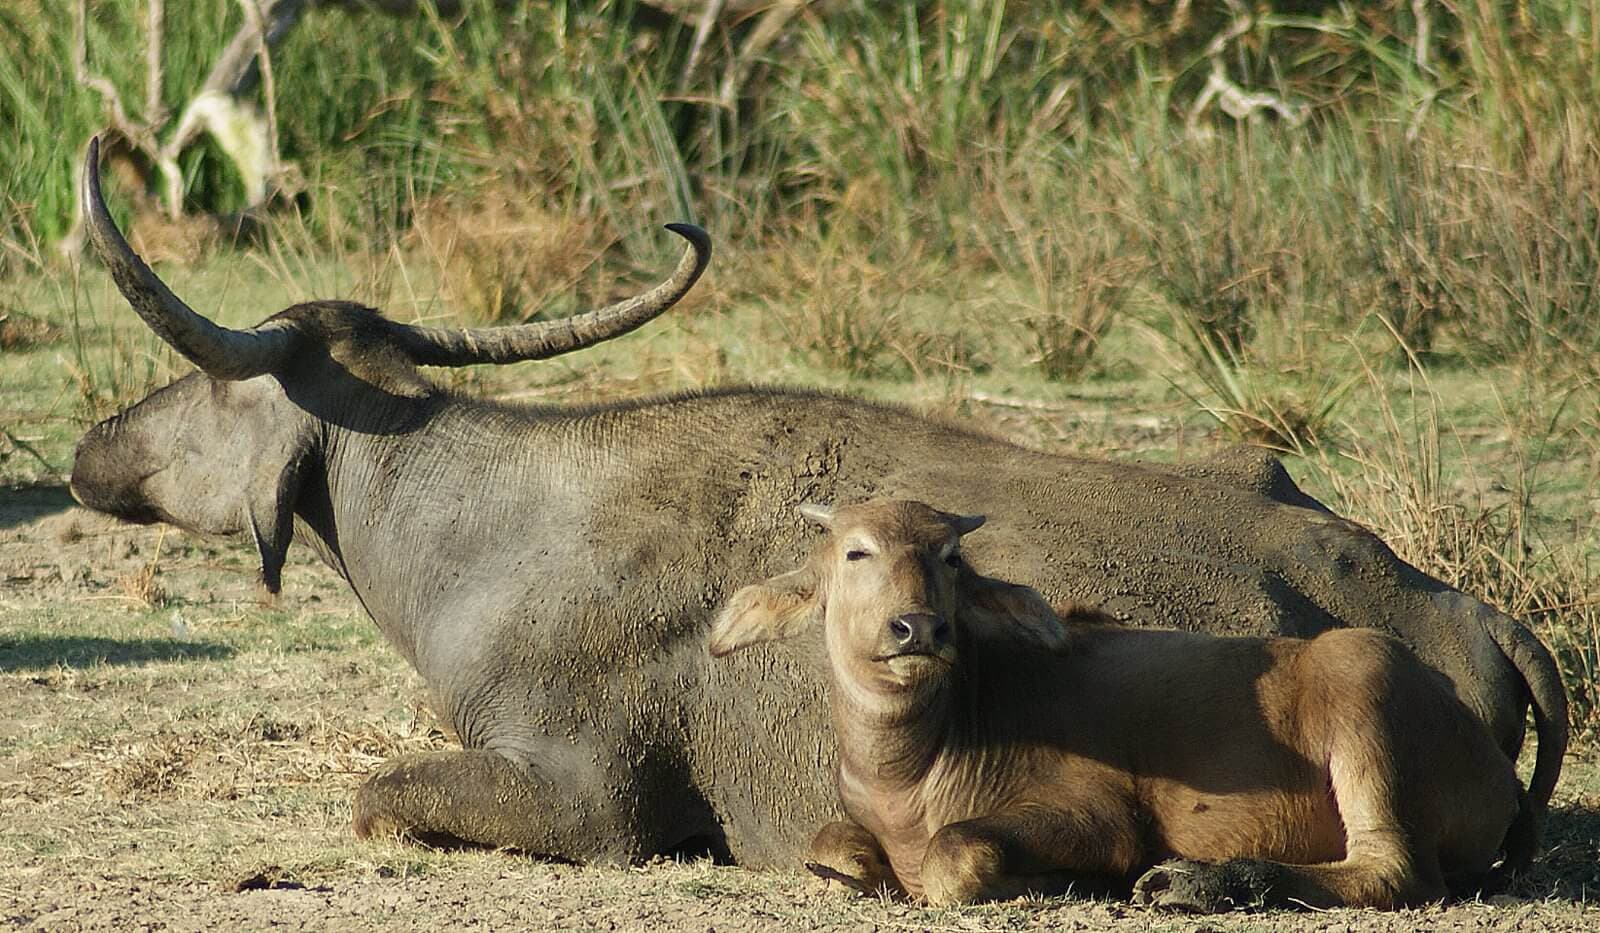 Wild animals relaxing in the Minneriya National Park, Sri Lanka.